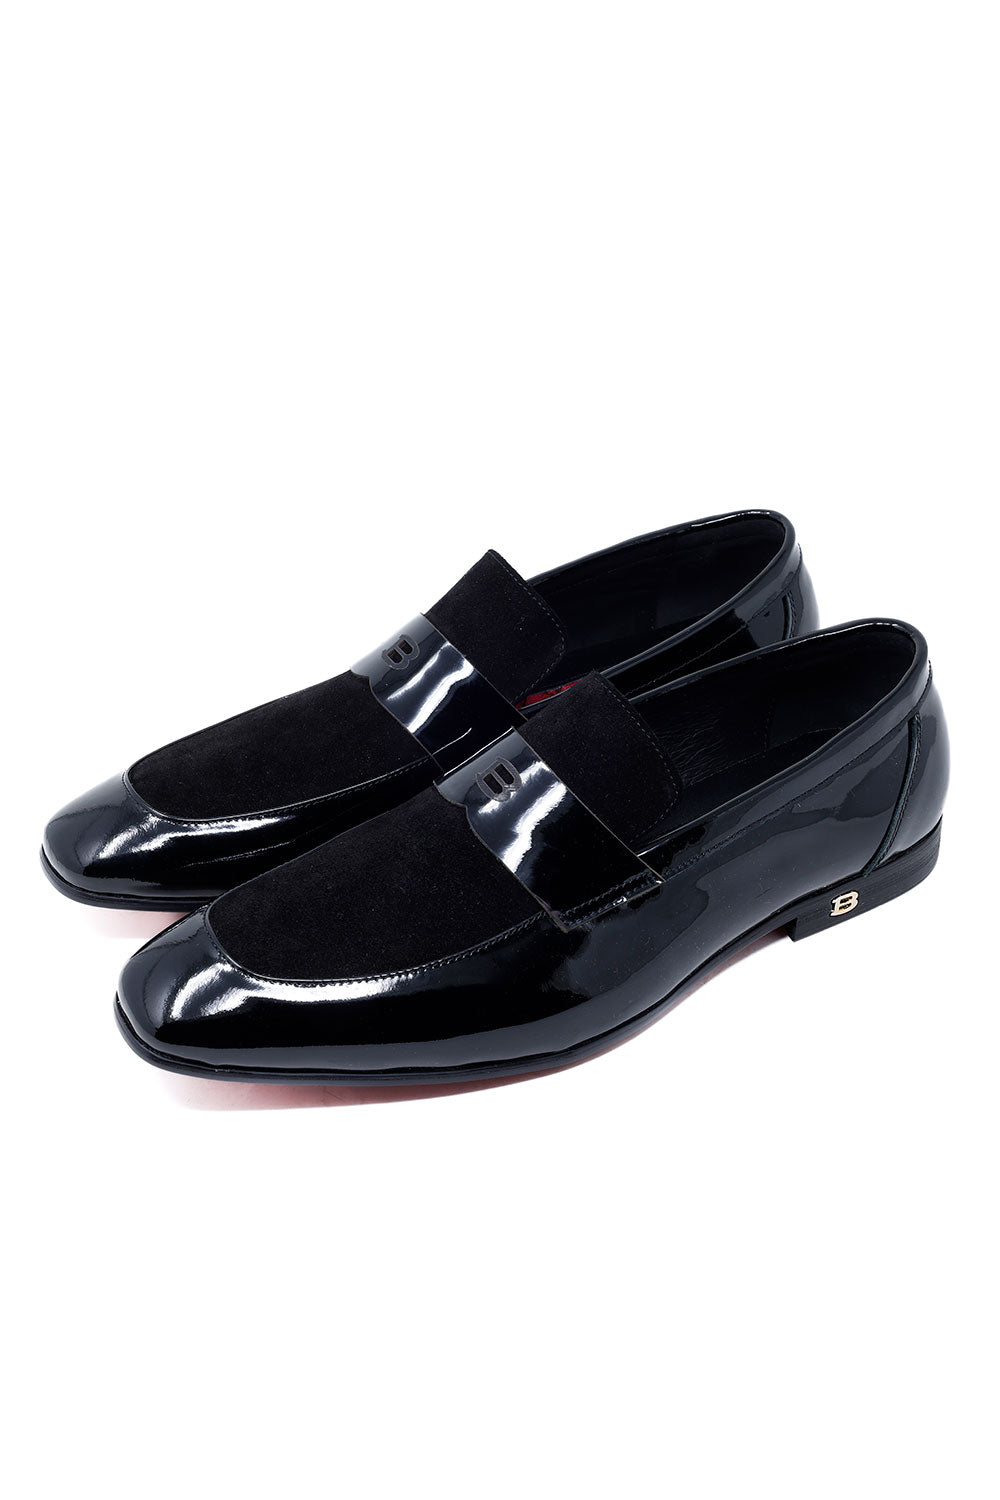 Barabas Men's Shinny Bright Slip On Loafer Shoes 3SH26 Black